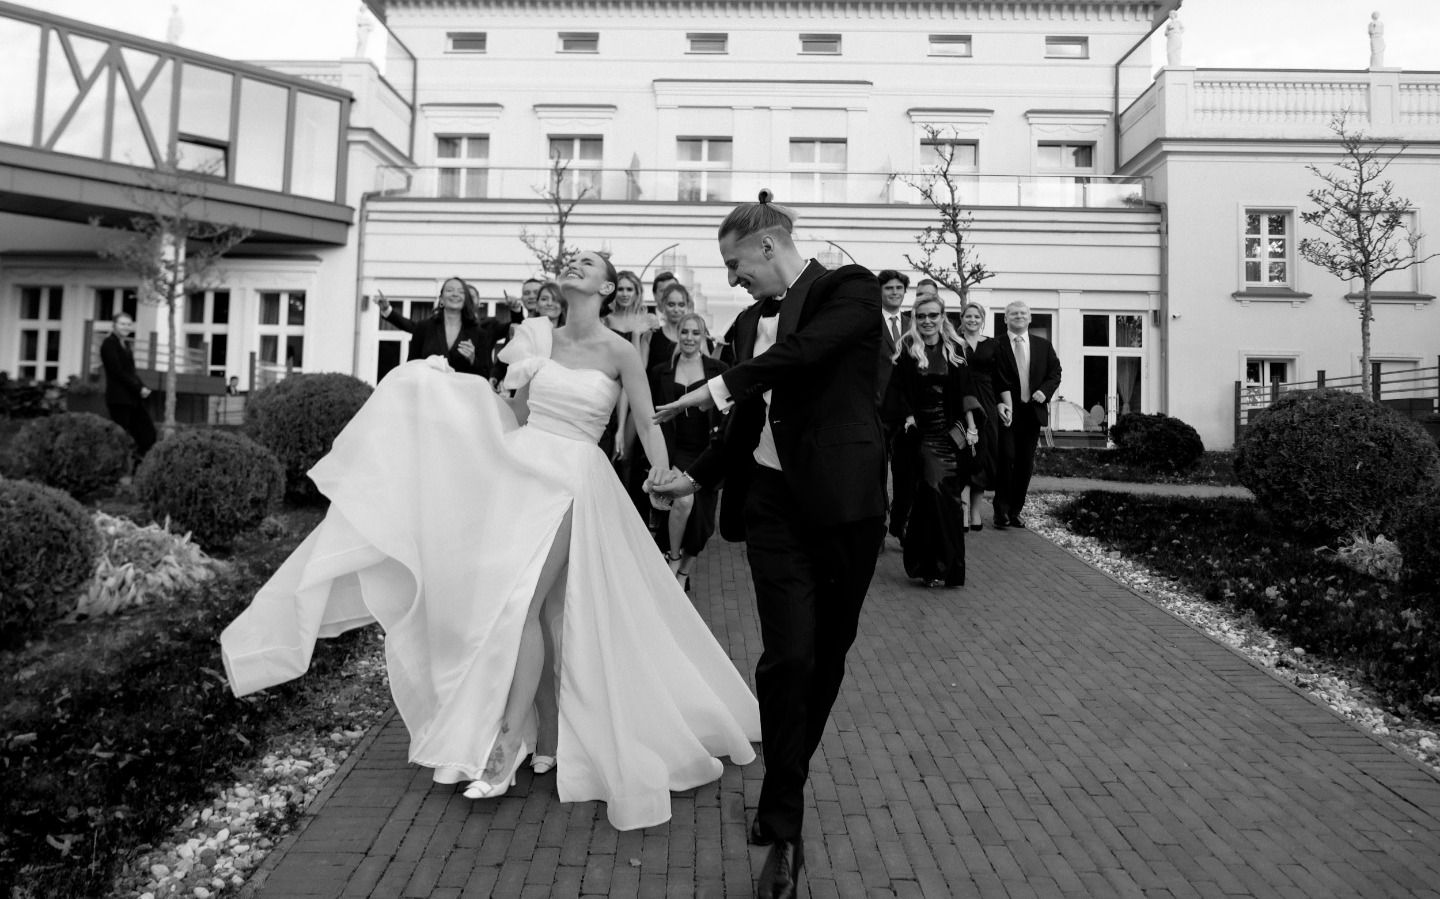 You’ll never walk alone: элегантная осенняя свадьба в Калининграде